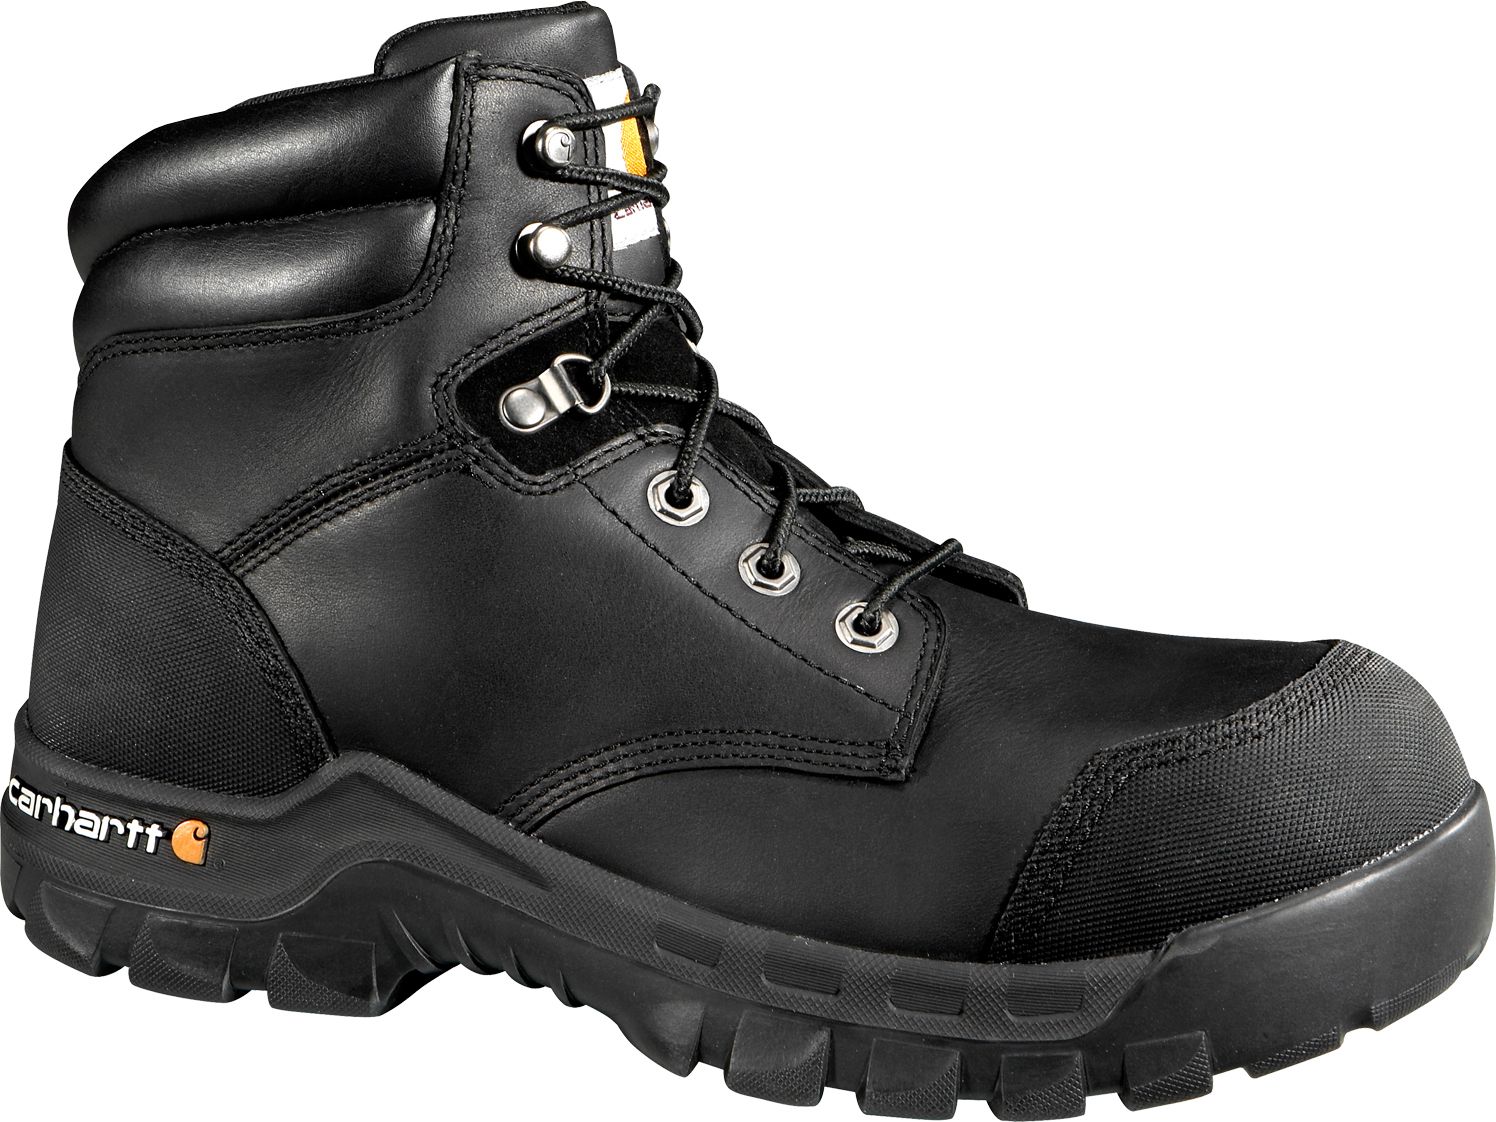 narrow width composite toe work boots